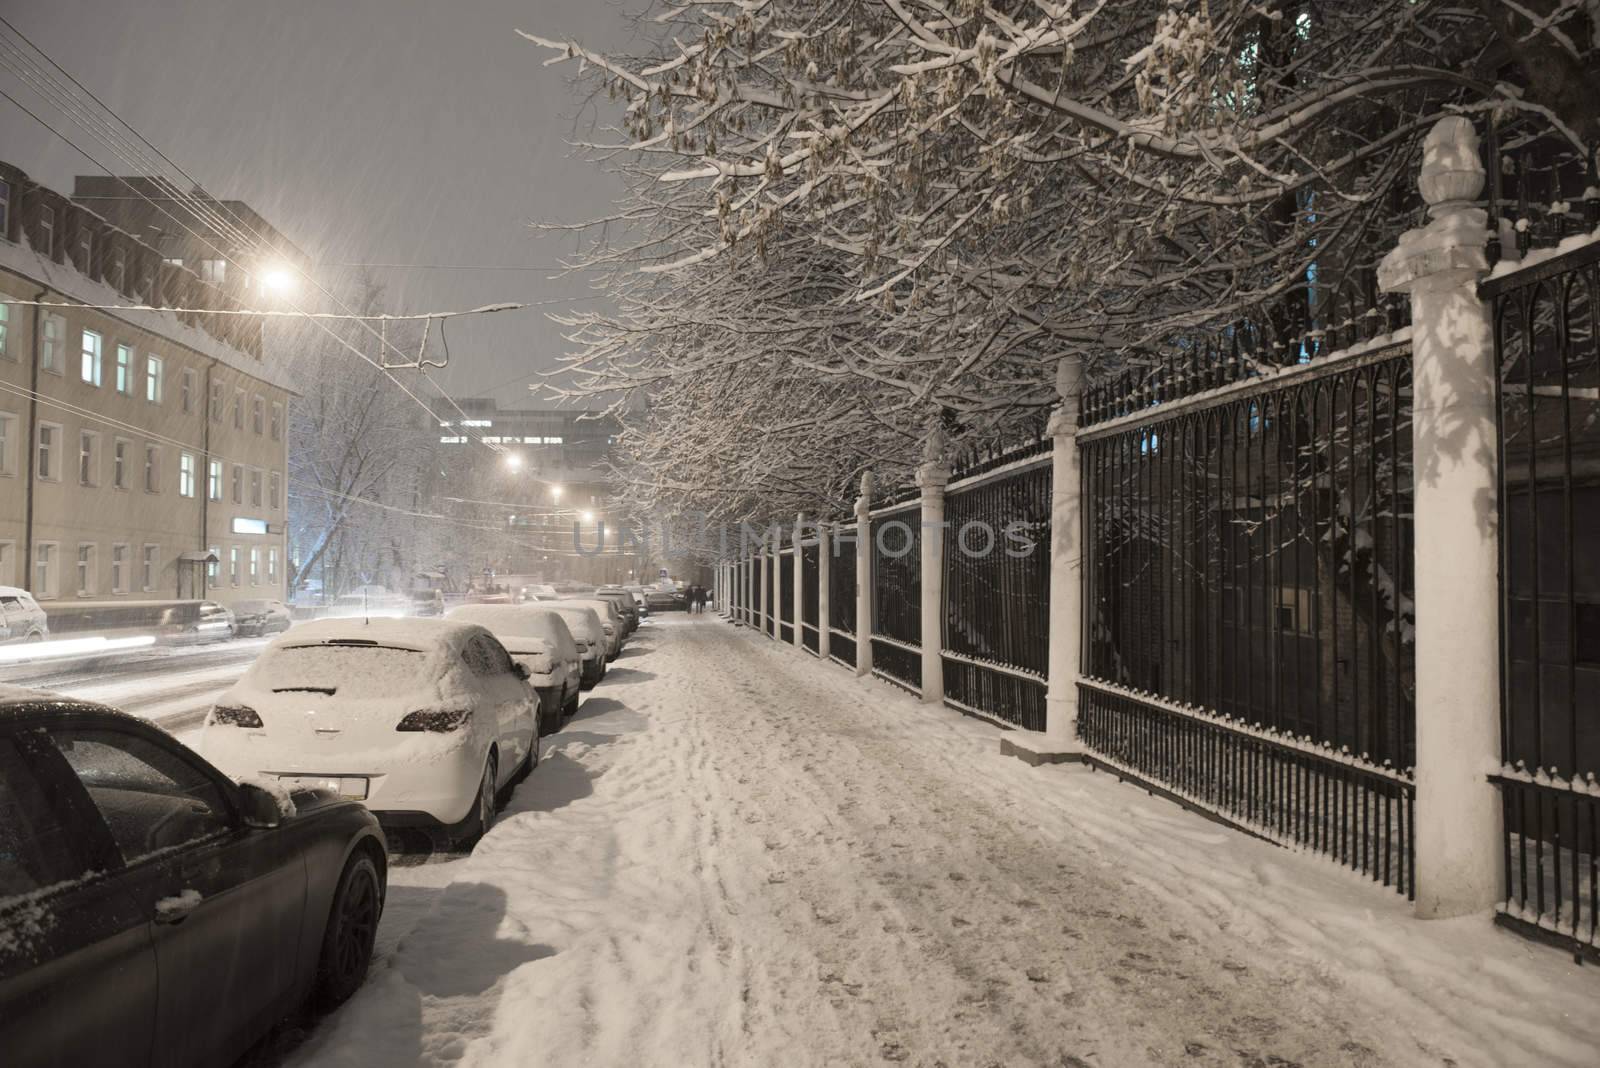  Urban winter night. by Alenmax